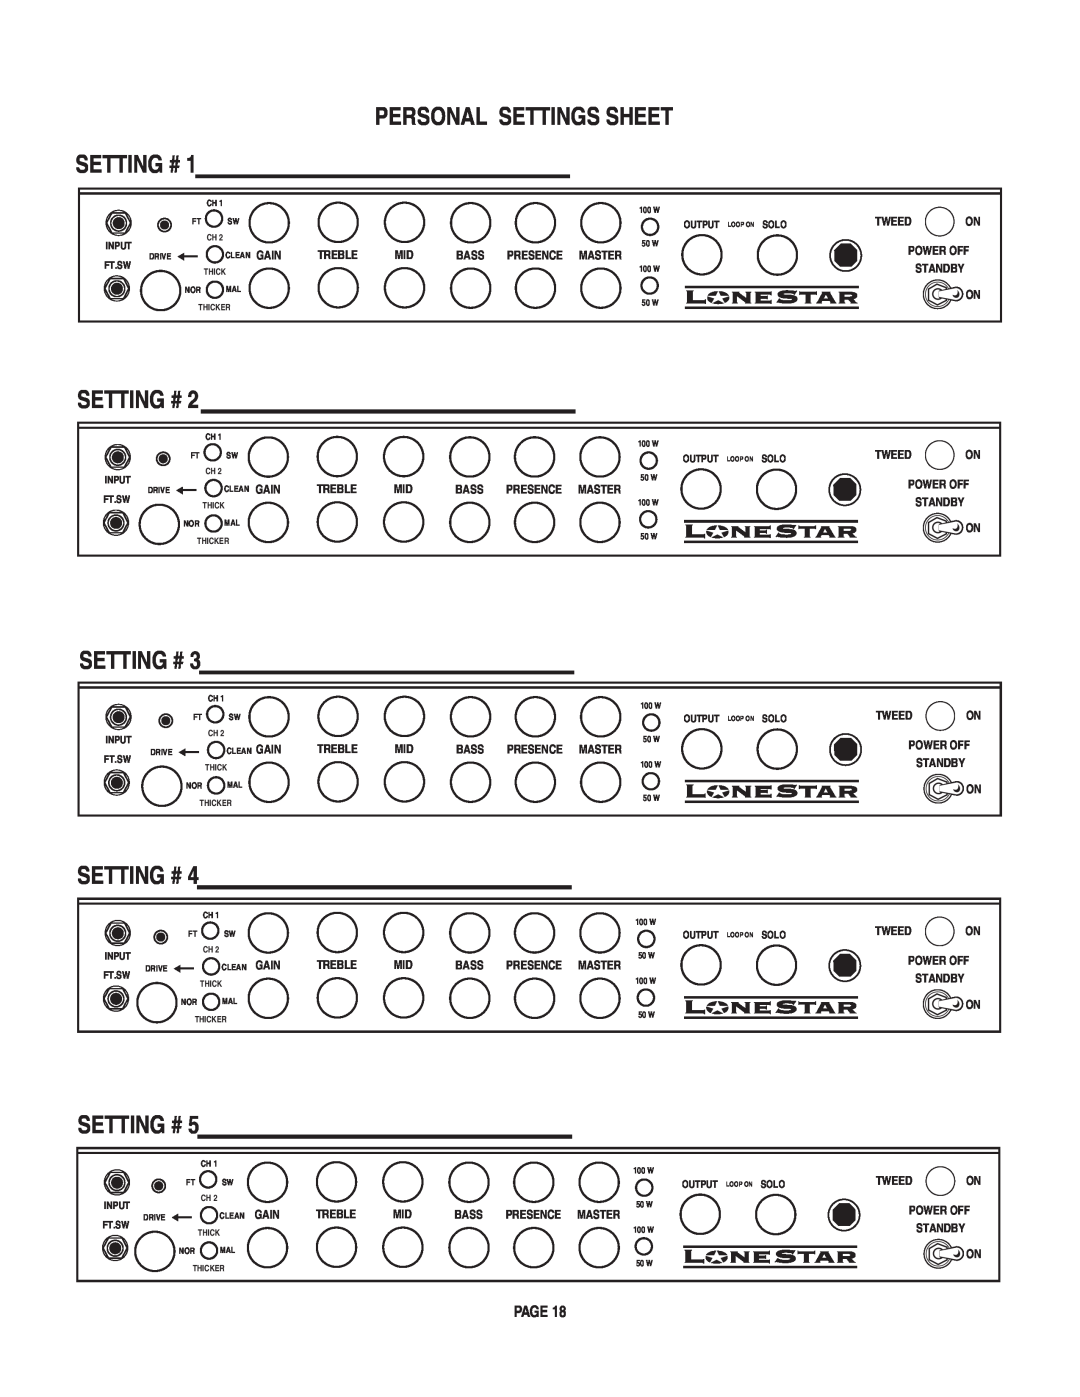 Mesa/Boogie LoneStar Amplifier owner manual Personal Settings Sheet Setting # 